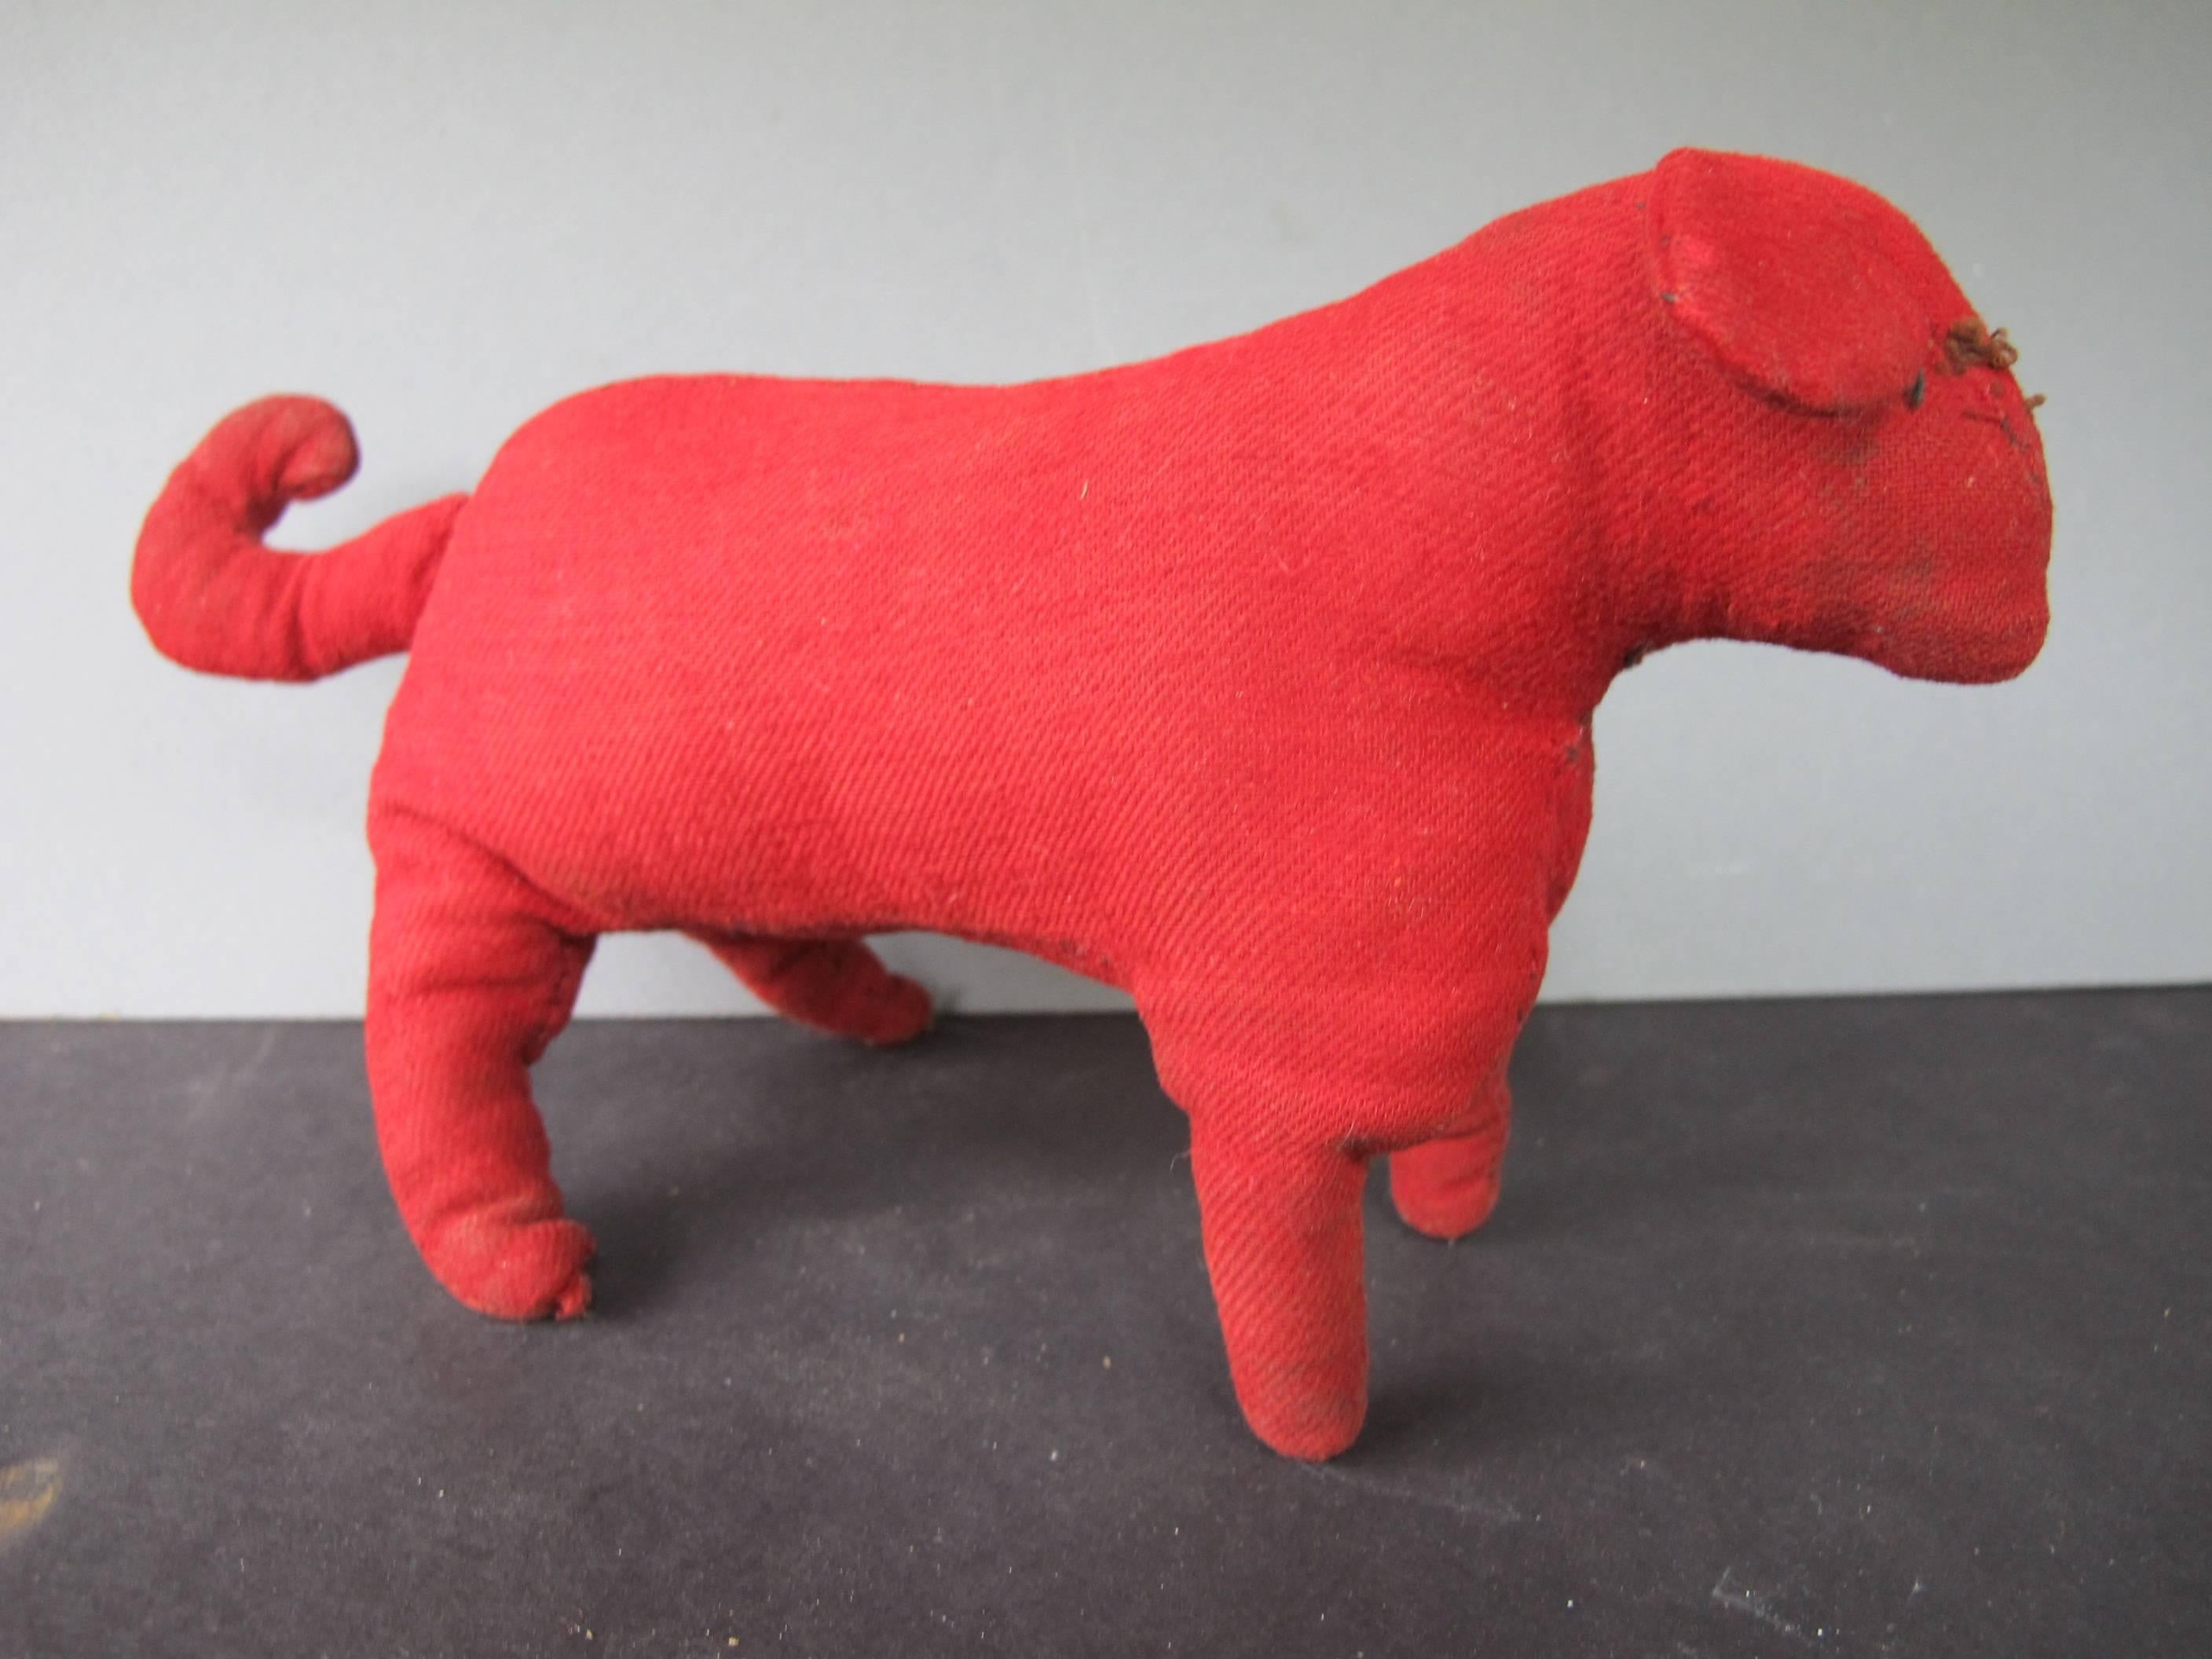 Needlework Child's Cloth Red Dog Toy